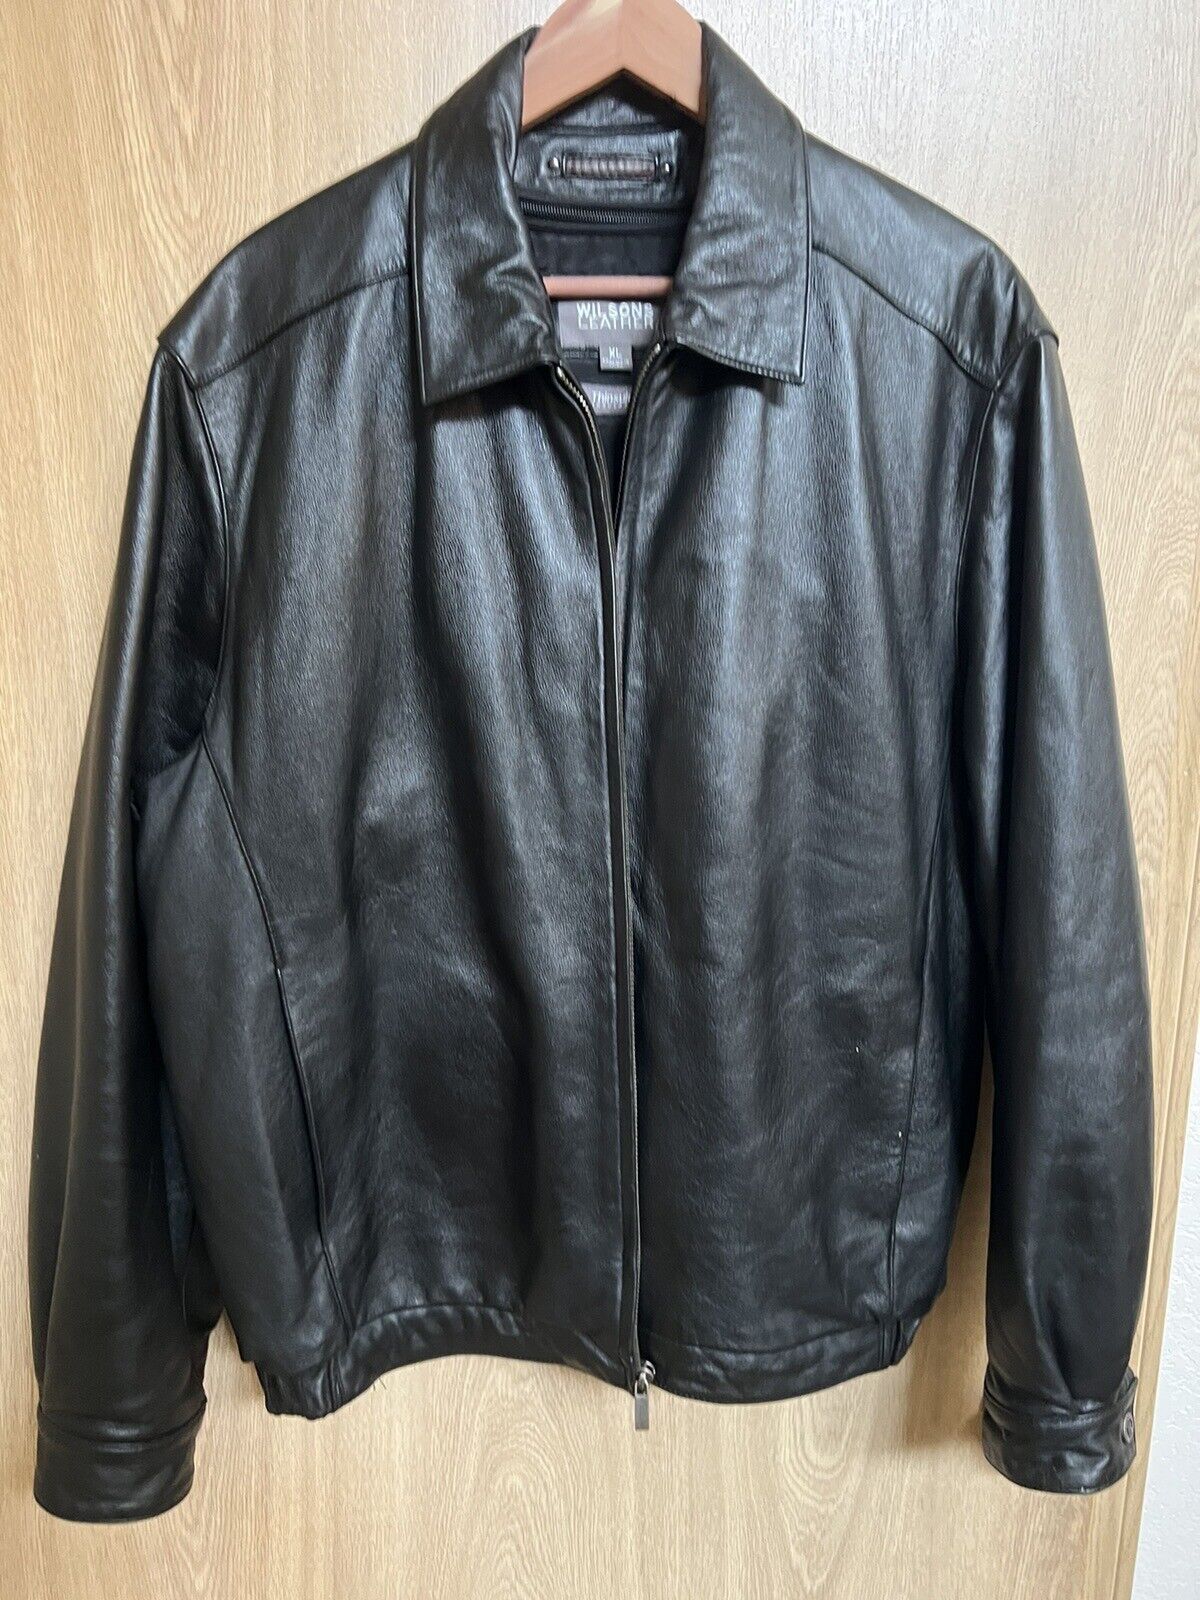 Wilson, leather bomber jacket, XL nice condition  | eBay | eBay US